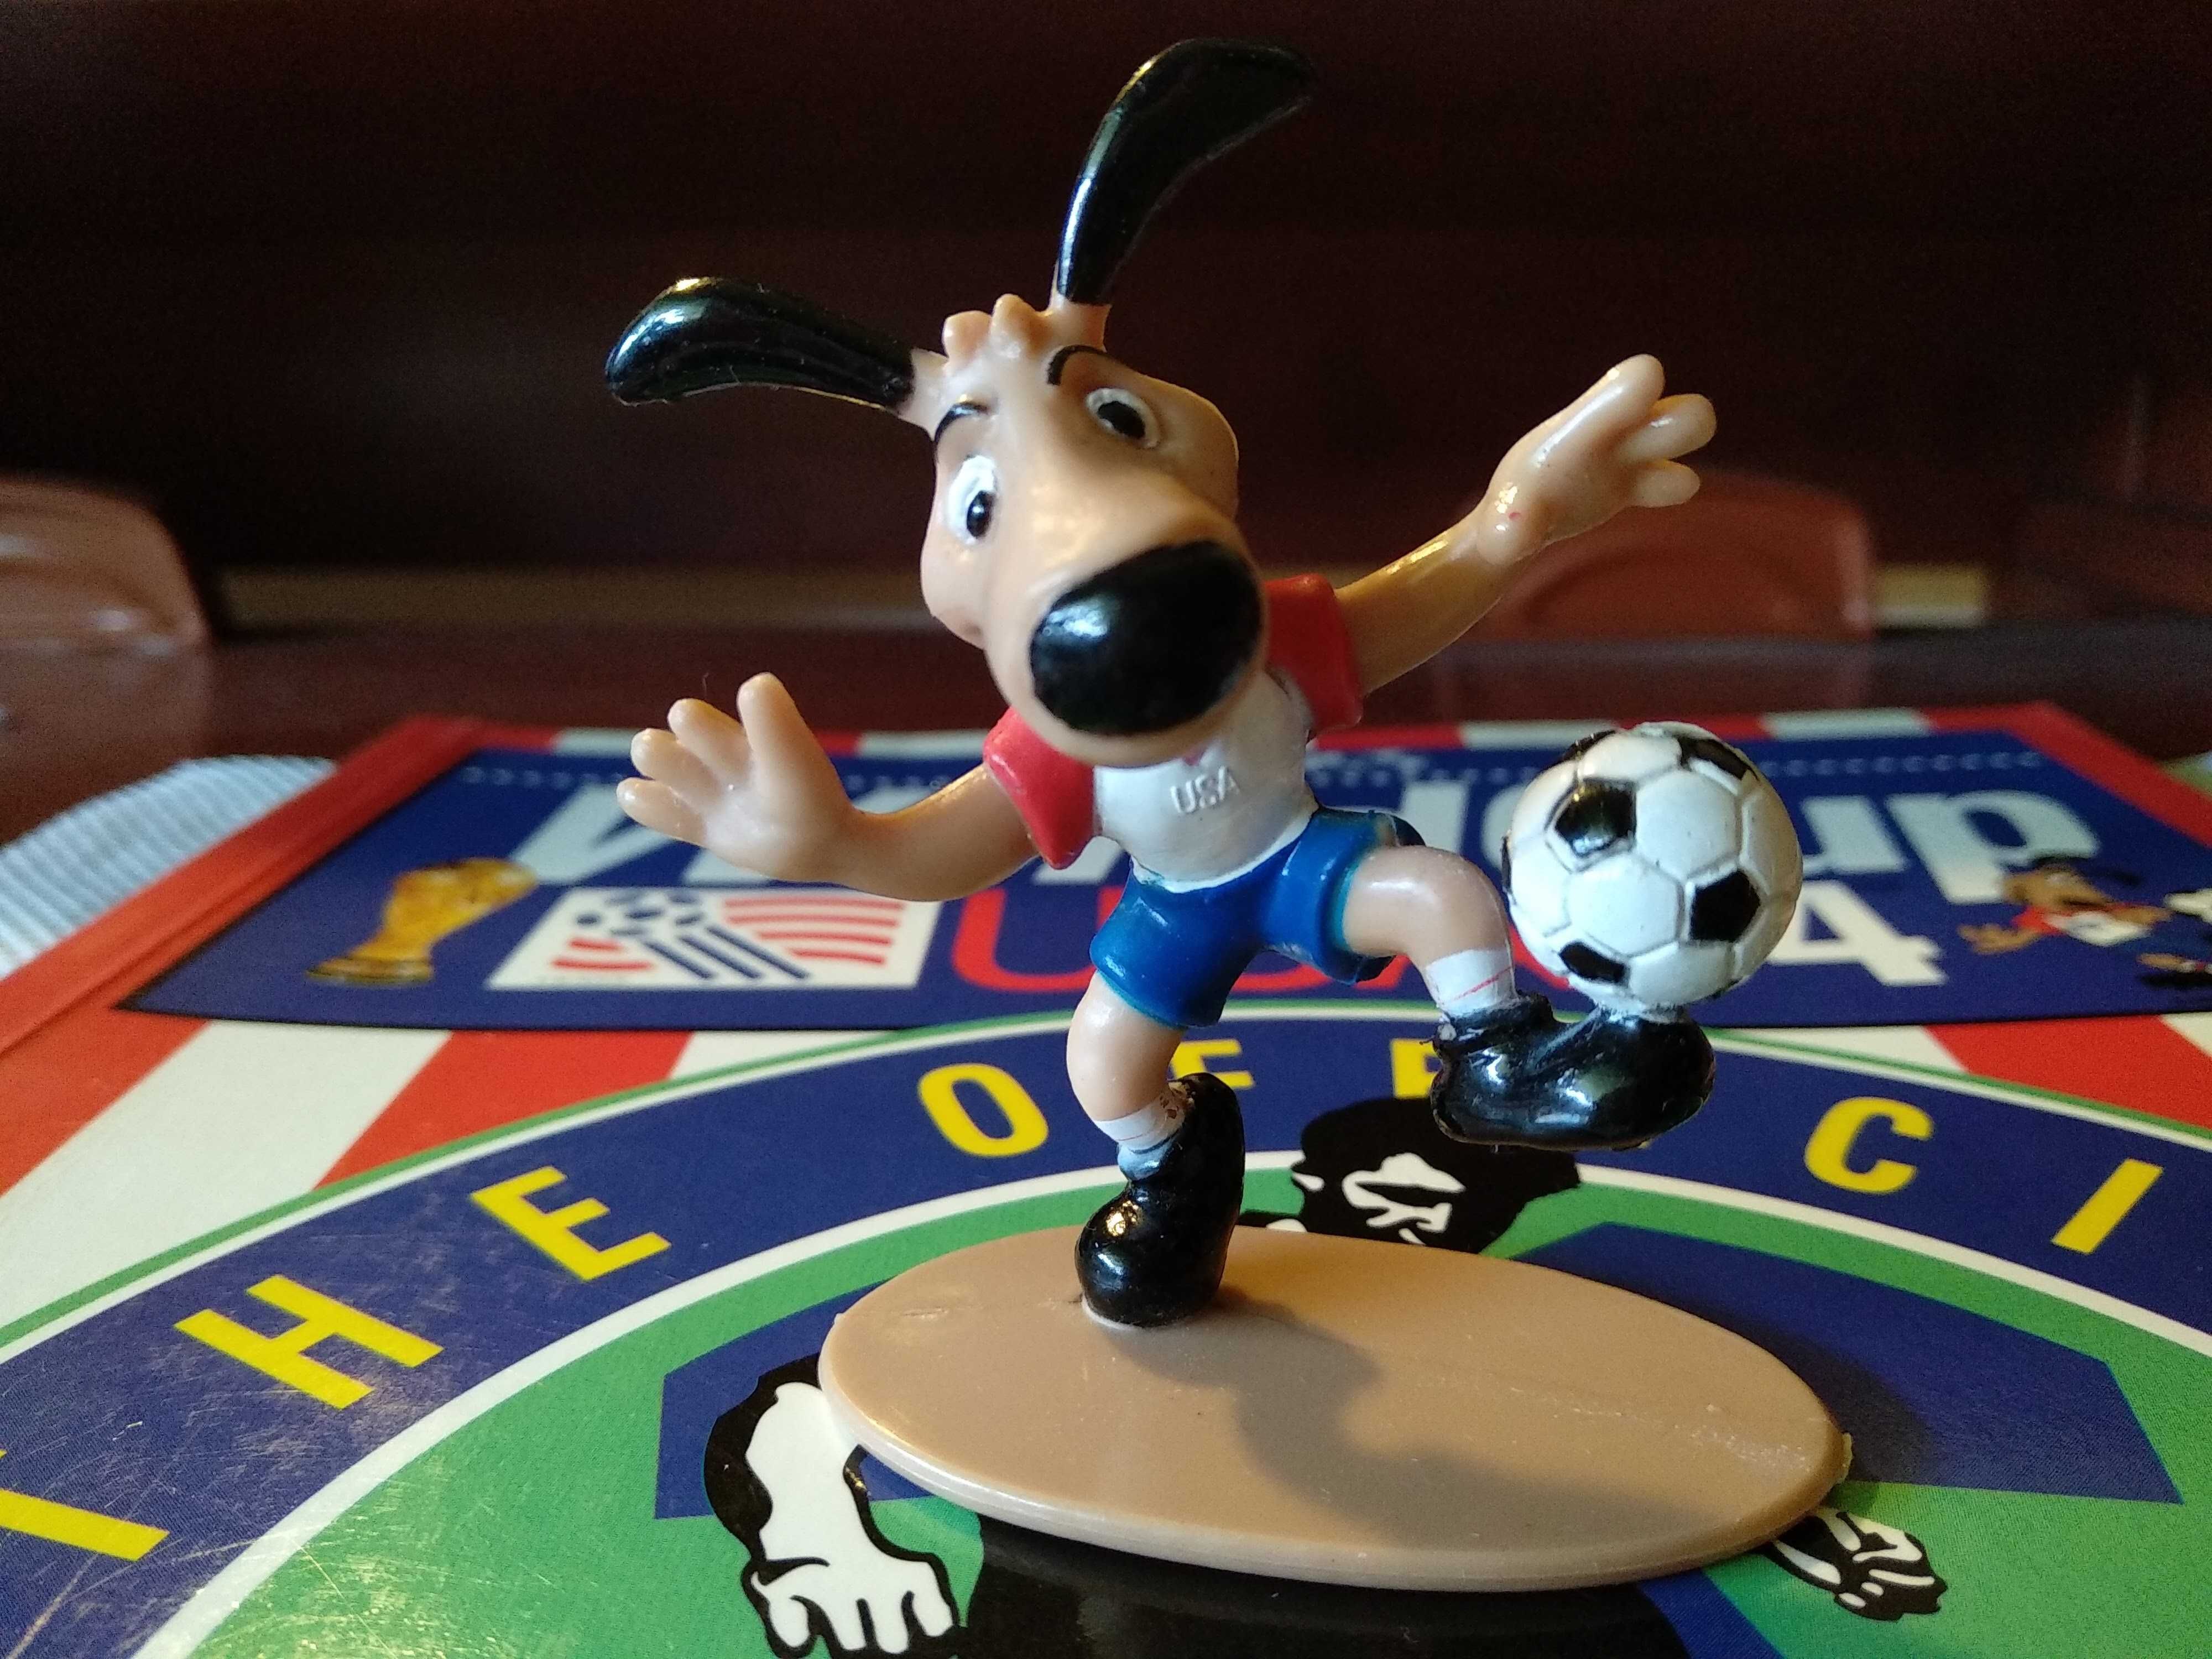 Striker Mascot USA 1994 World Cup Mundial 94 Mascote Dog Soccer Figure